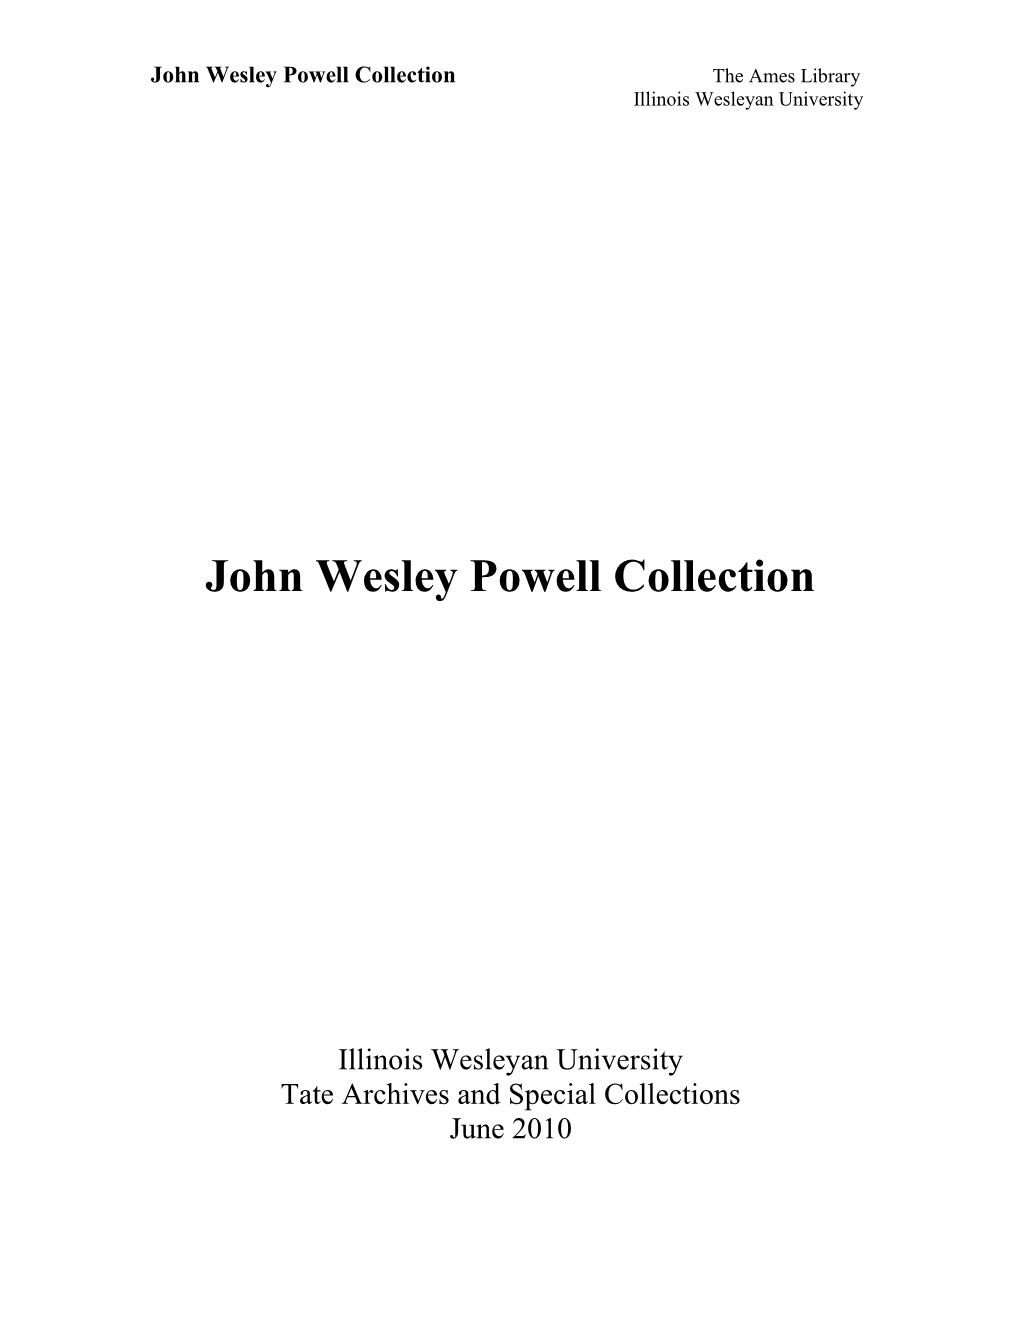 John Wesley Powell Collection the Ames Library Illinois Wesleyan University